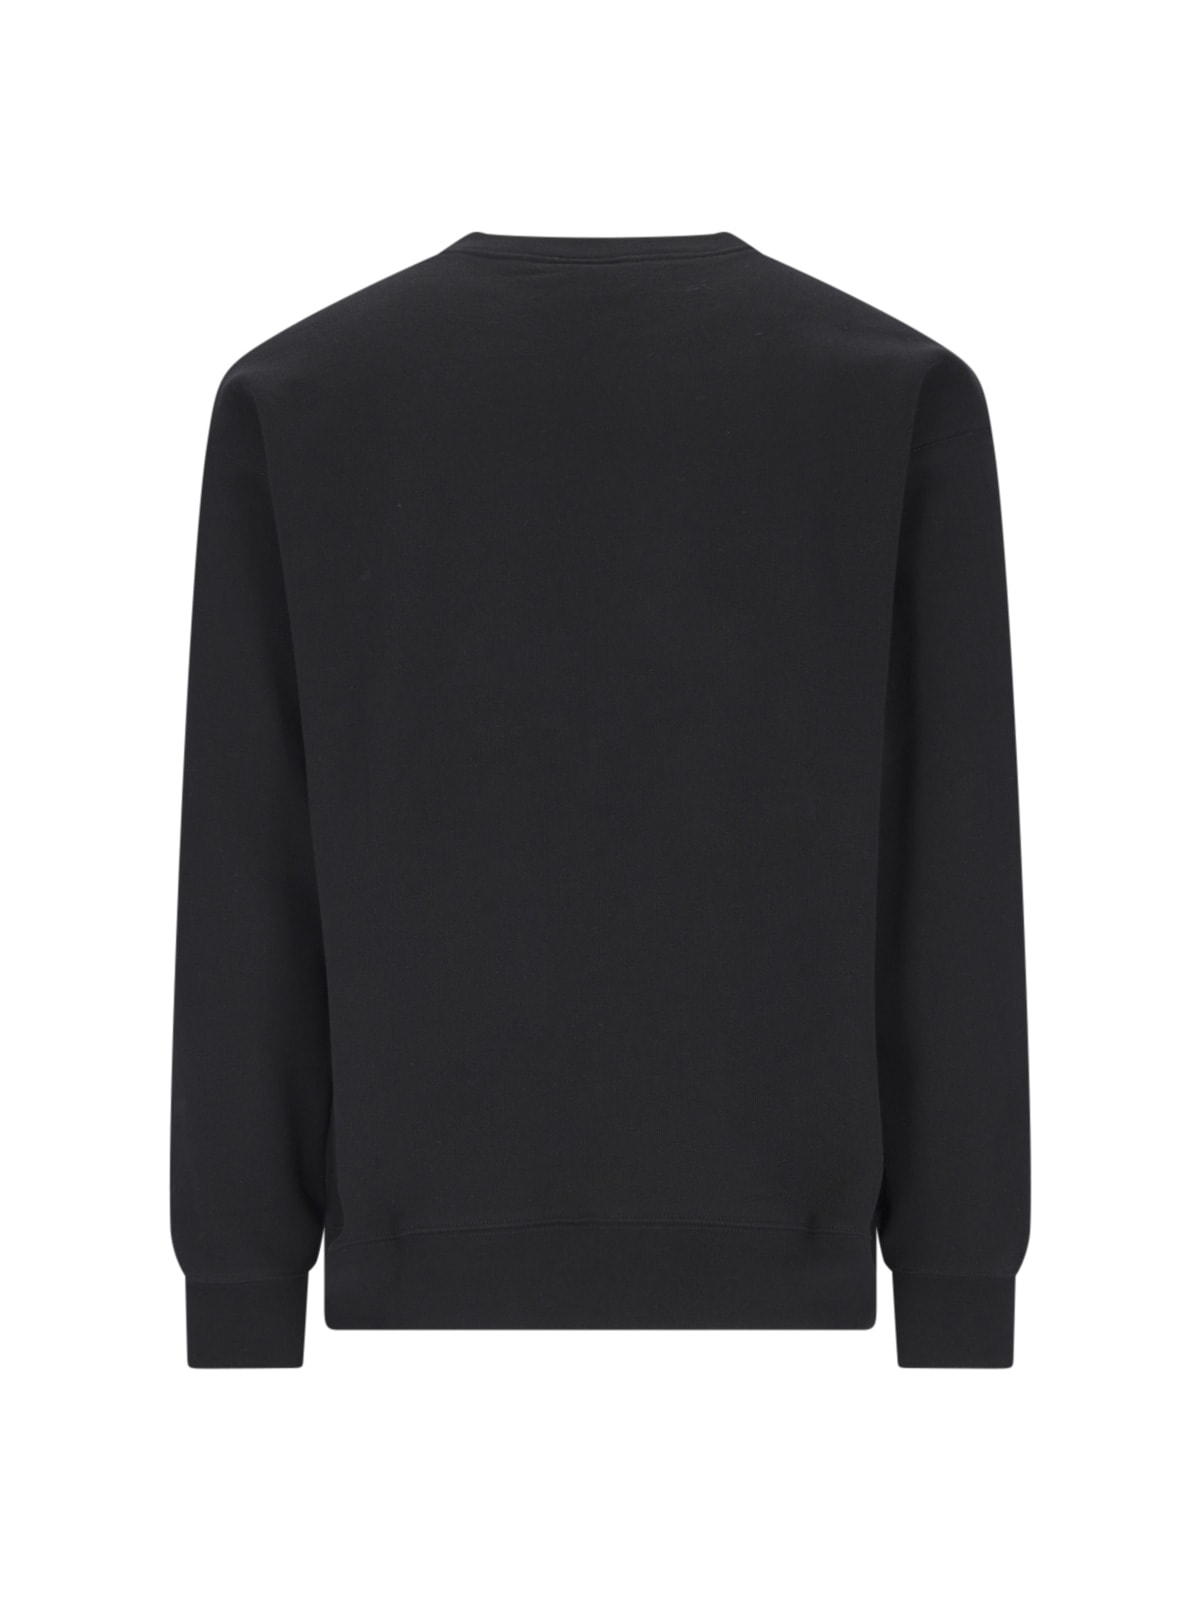 Shop Dime Bff Sweatshirt In Black